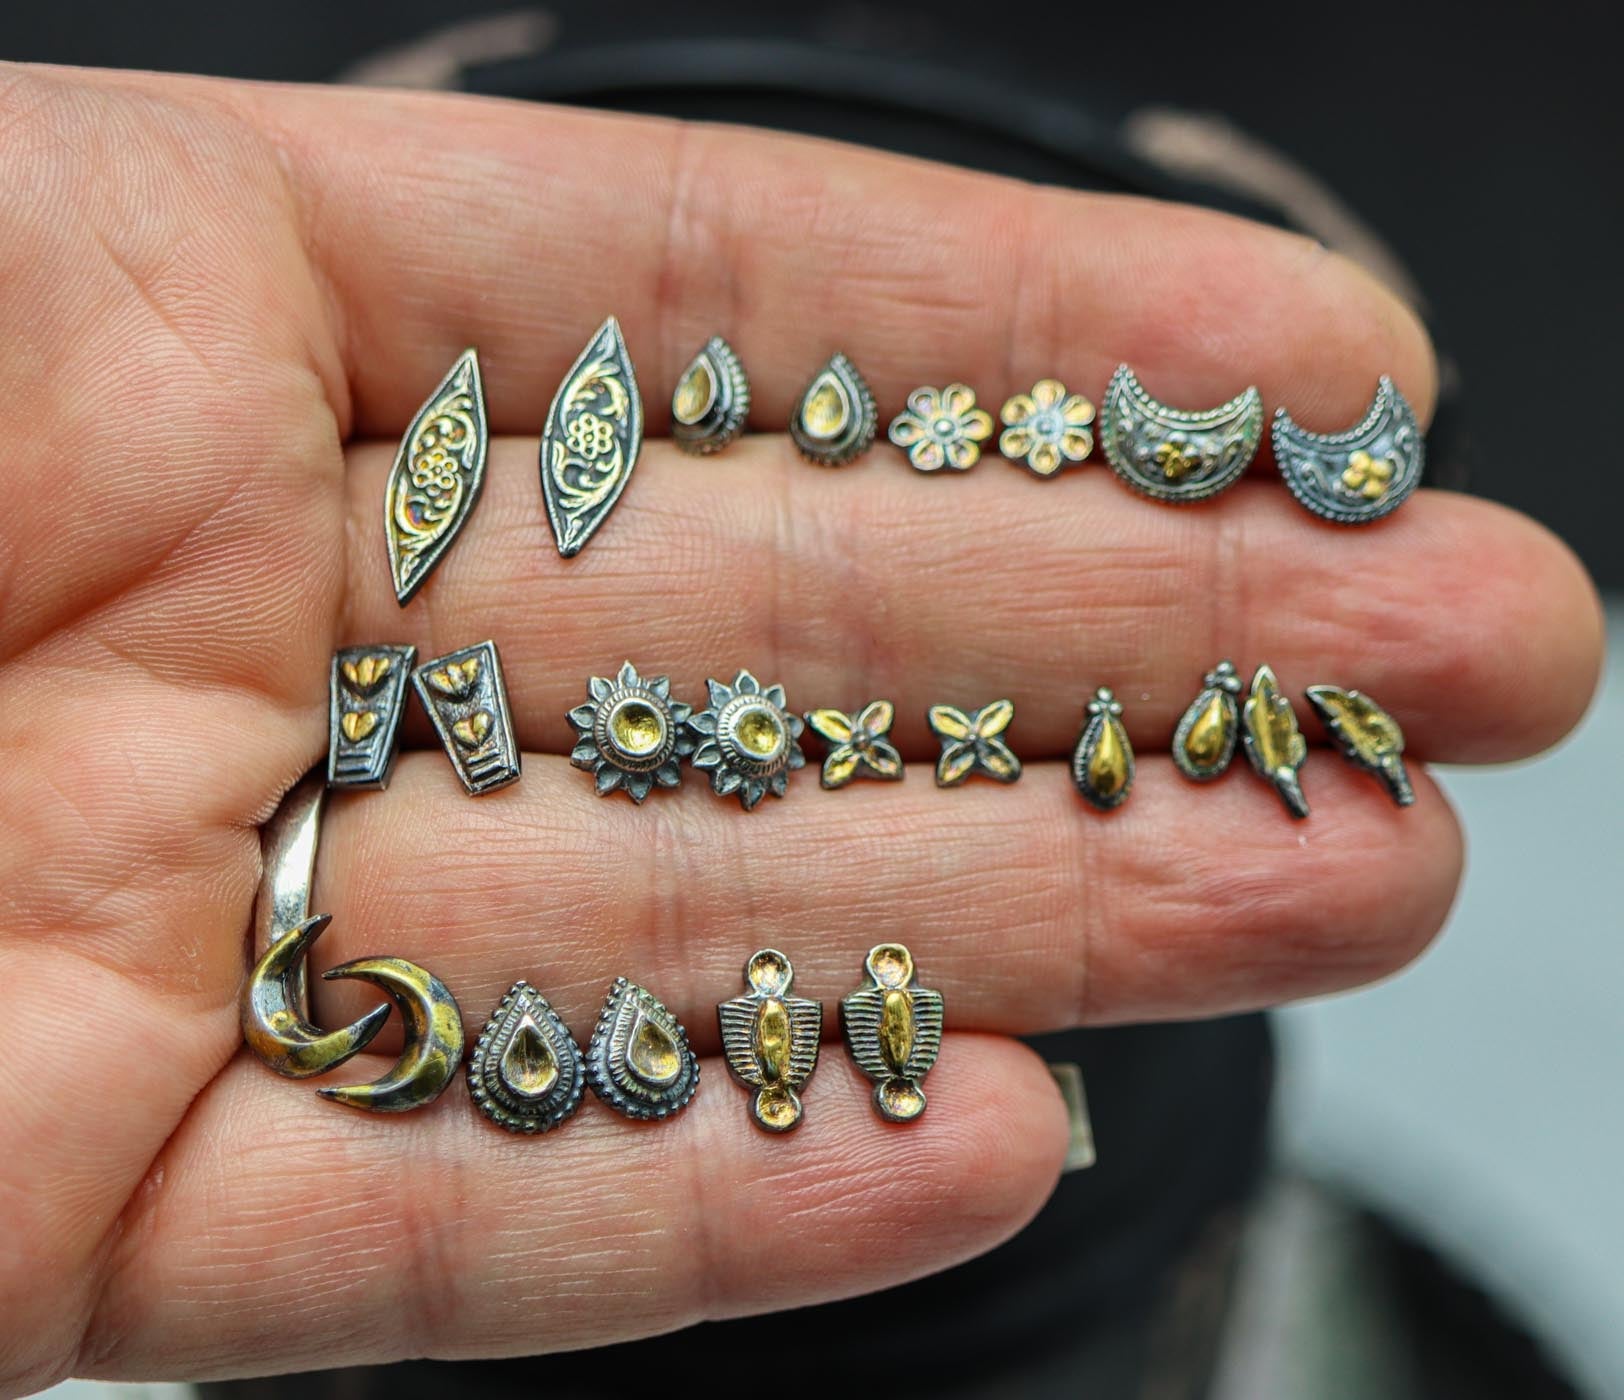 Flower Stud Earrings in Sterling Silver and 24k Gold